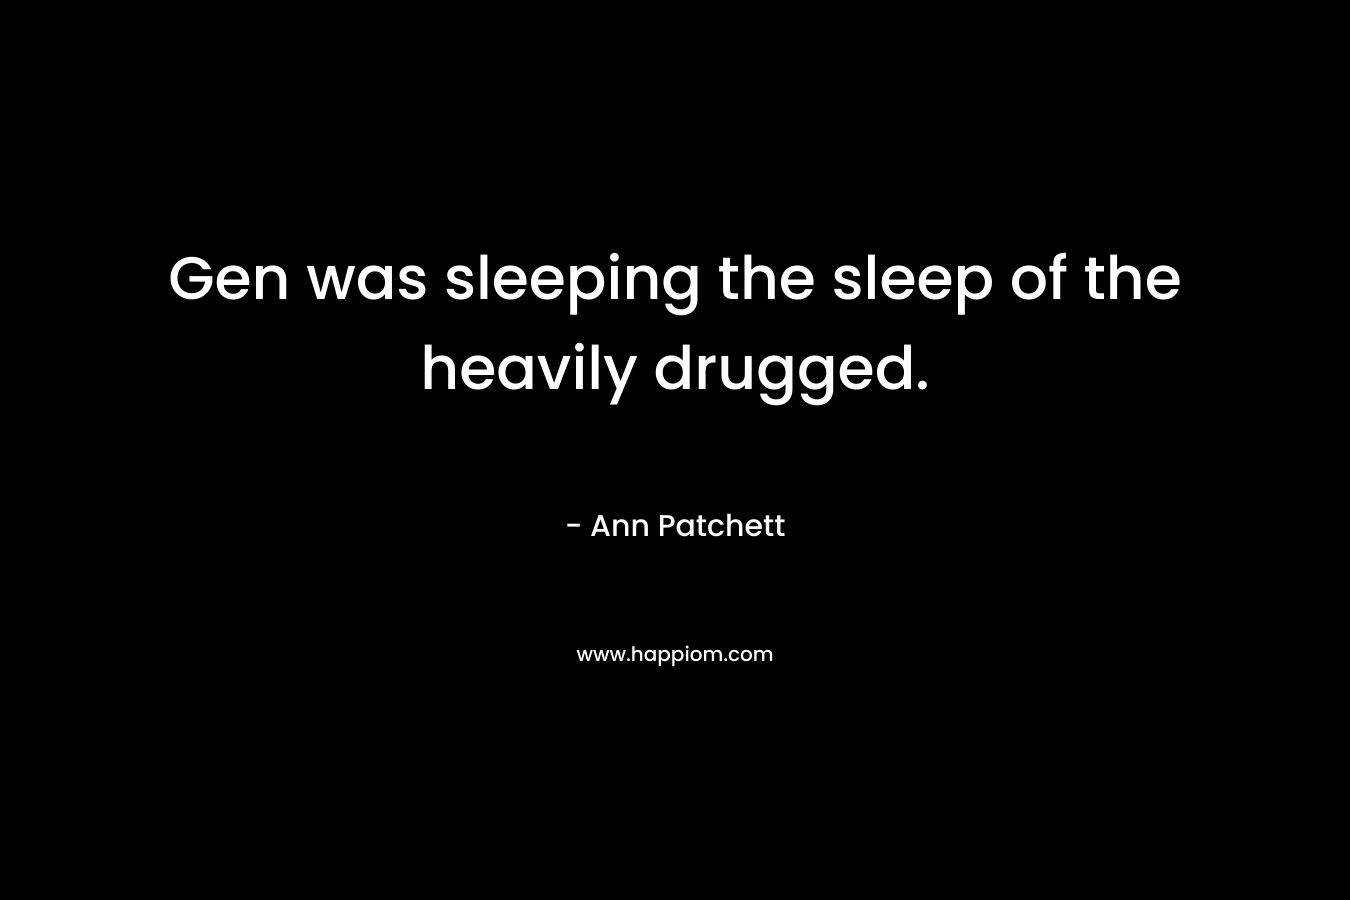 Gen was sleeping the sleep of the heavily drugged. – Ann Patchett